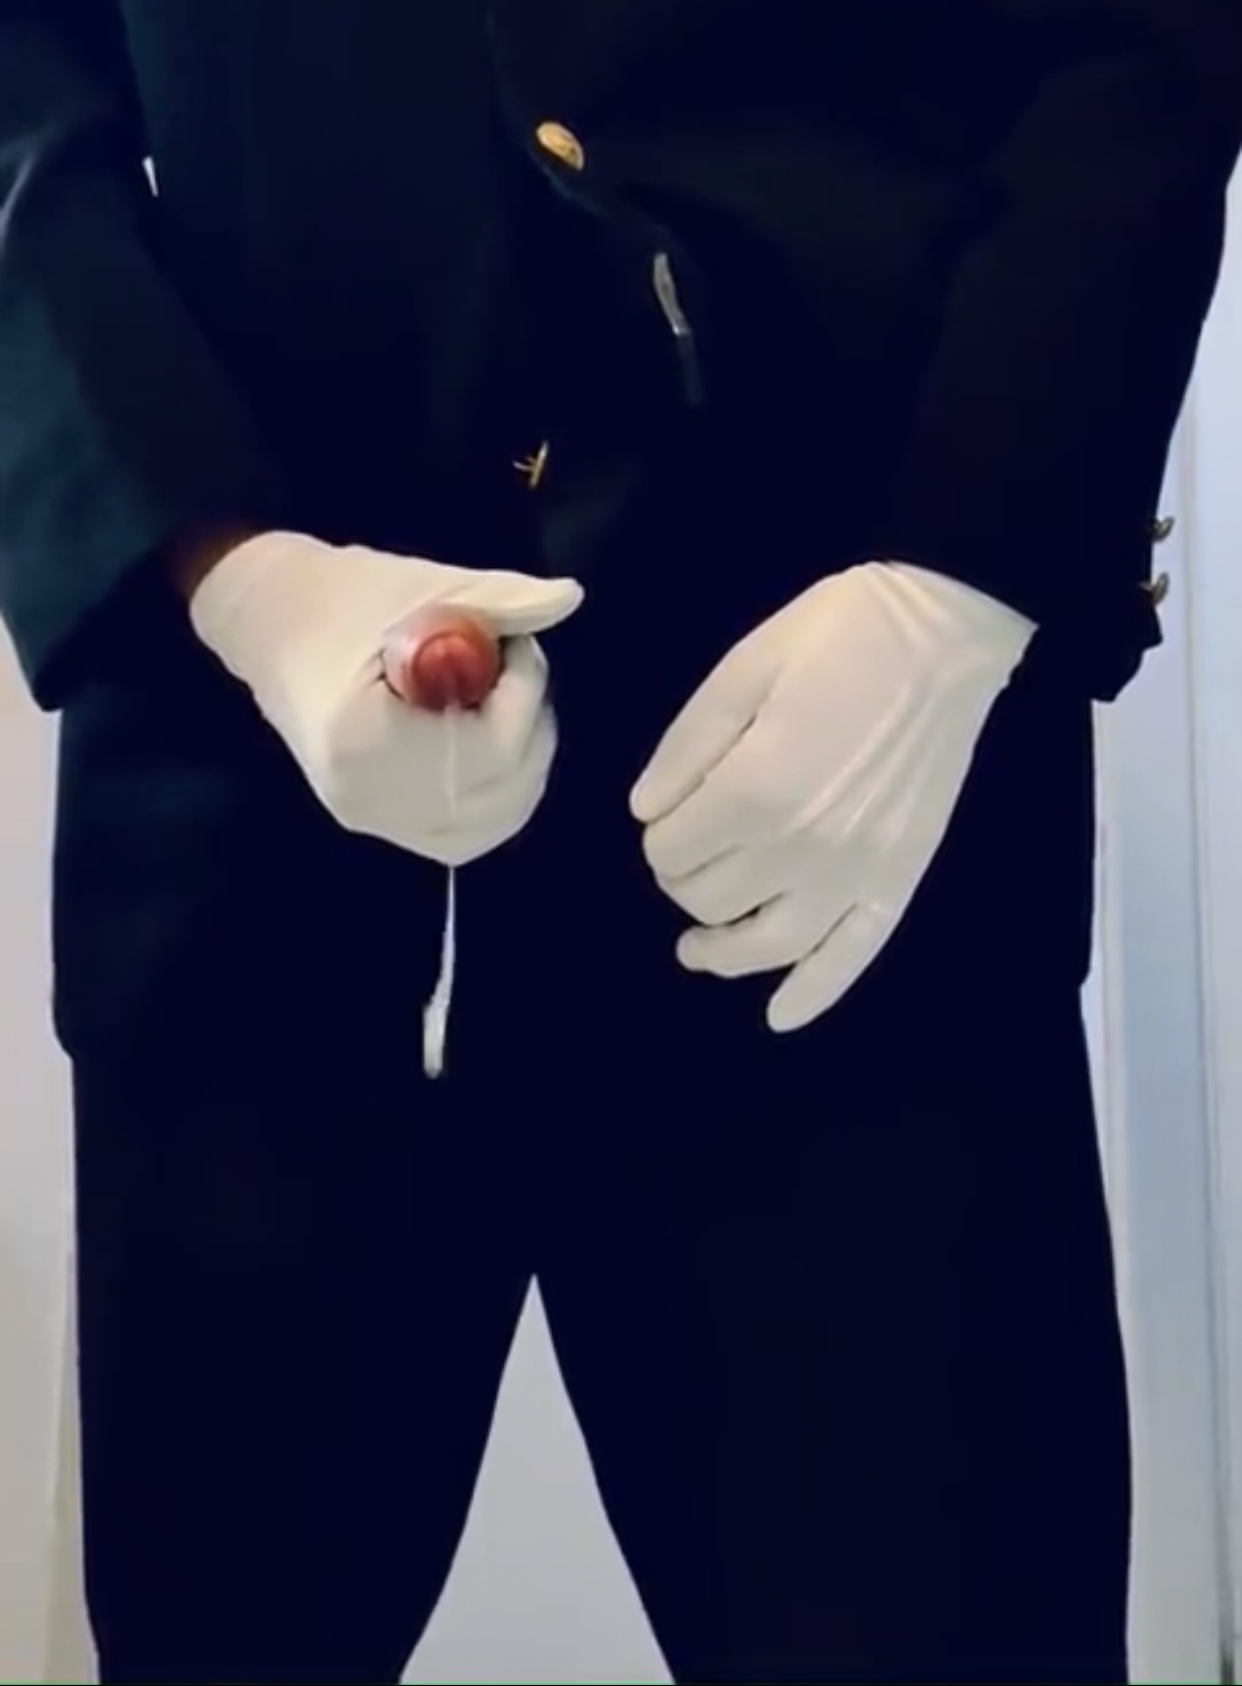 White gloves and cum